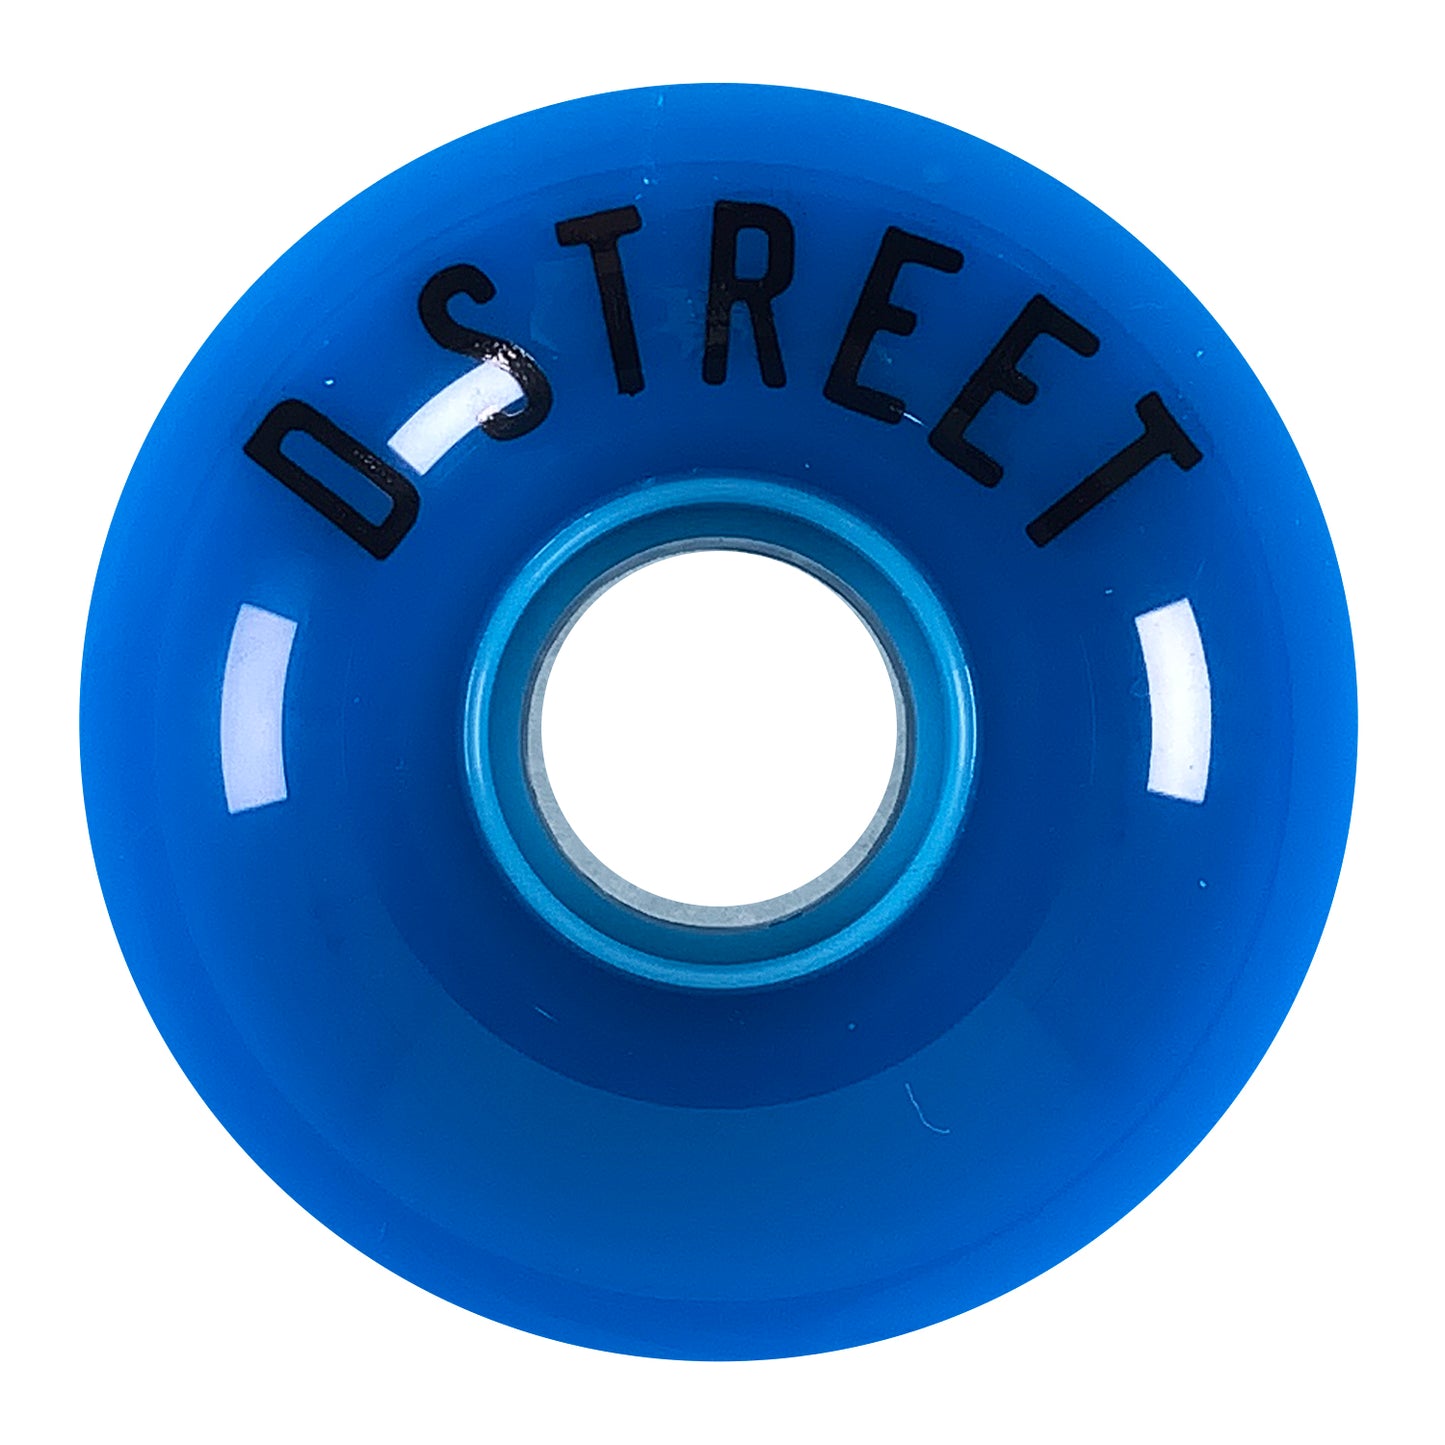 D Street Wheels - 59mm - 59 Cent 78A Blue - Prime Delux Store